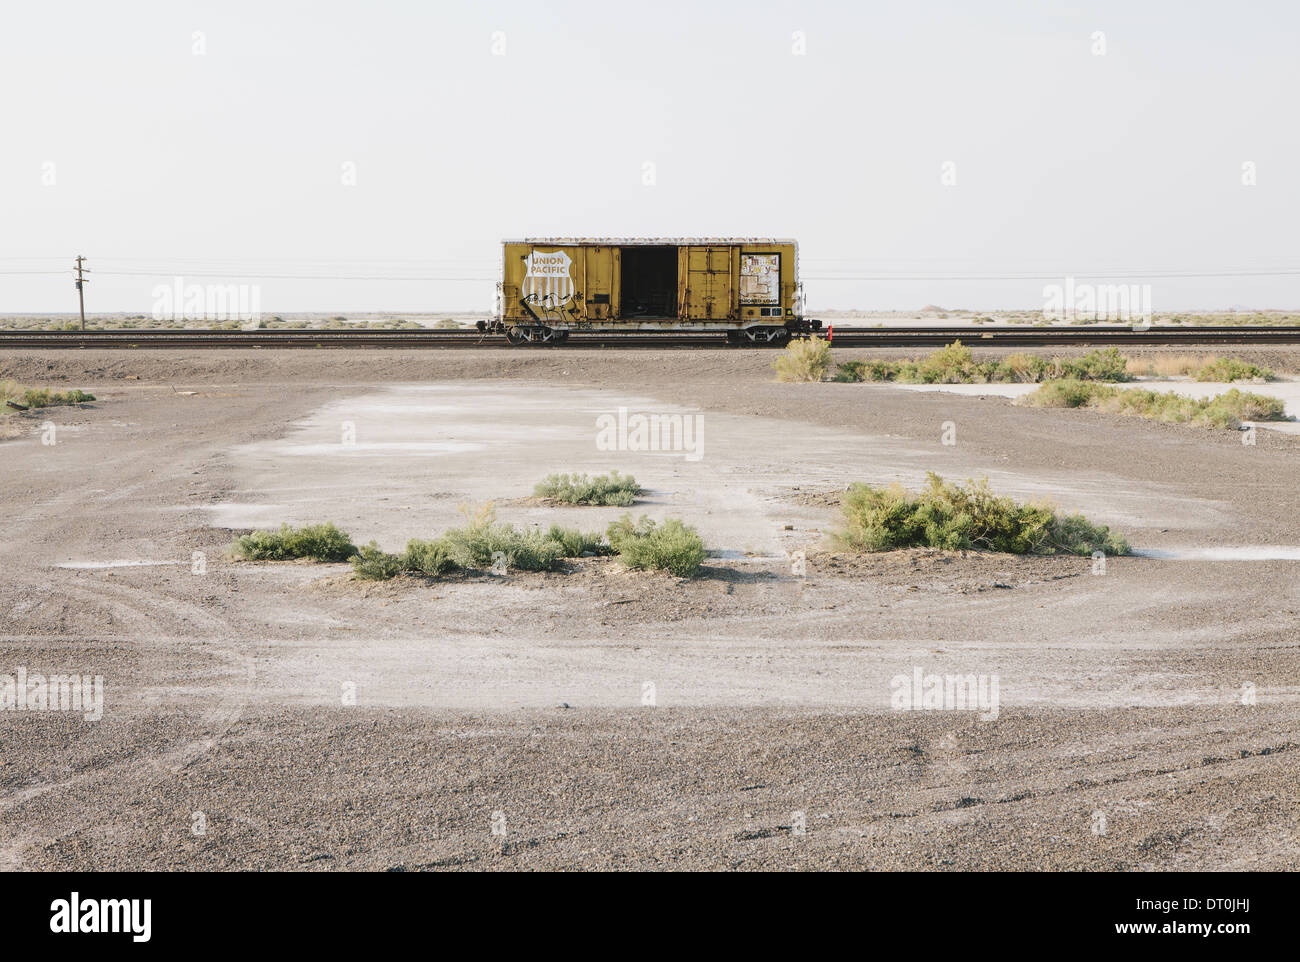 Utah USA leere Box Auto Güterwagen auf train Tracks Wüste Stockfoto